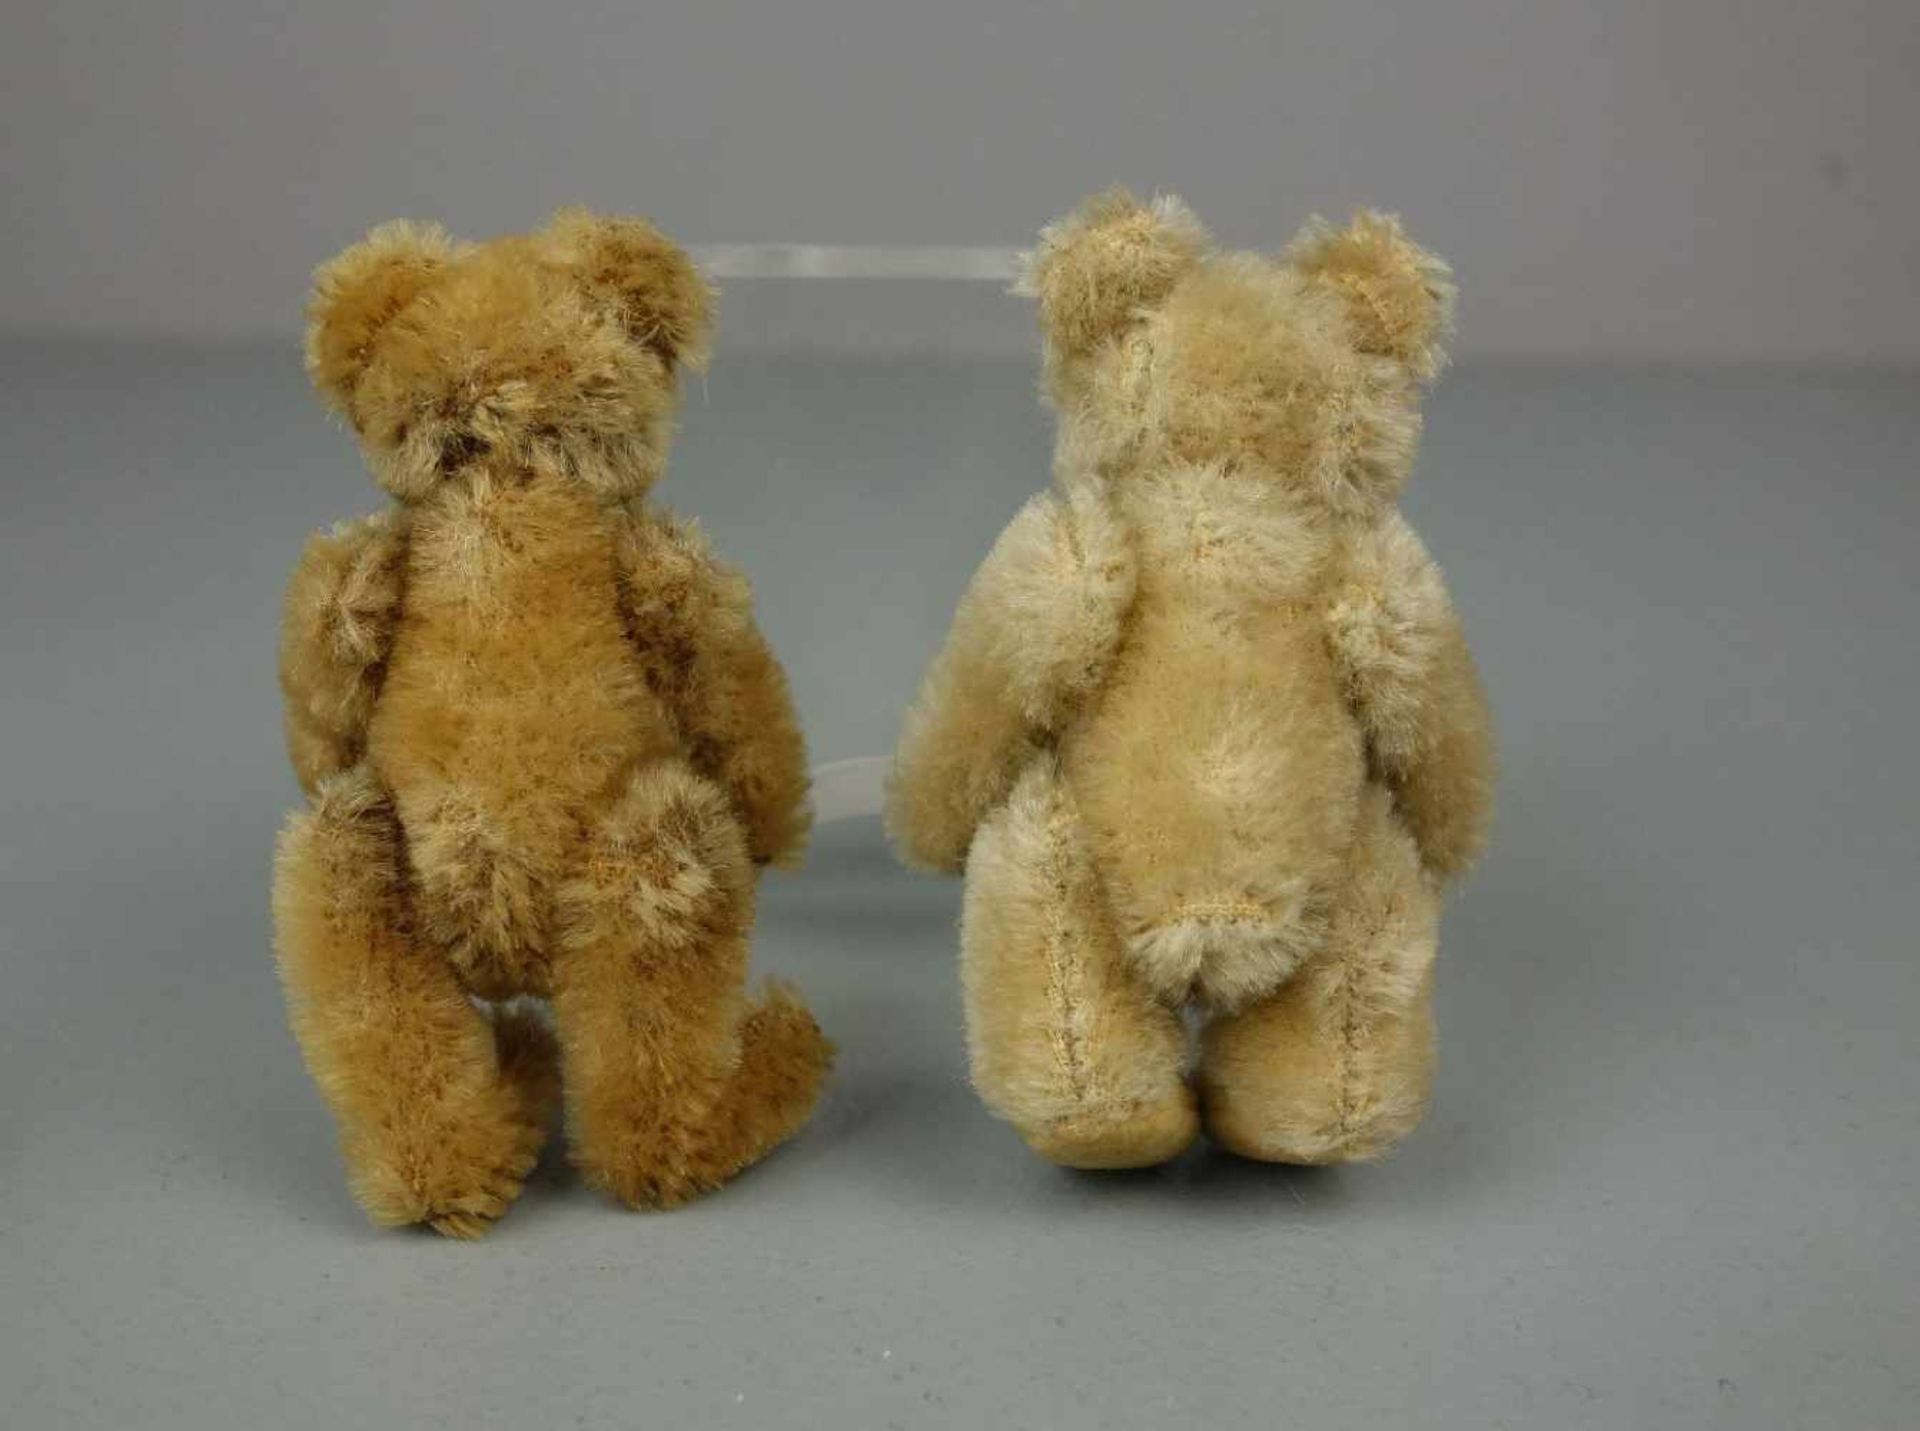 PLÜSCHTIERE / TEDDYBÄREN: Konvolut Miniatur Teddys / Bären - 6 Stück / six teddy bears, 20. Jh., - Bild 6 aus 8